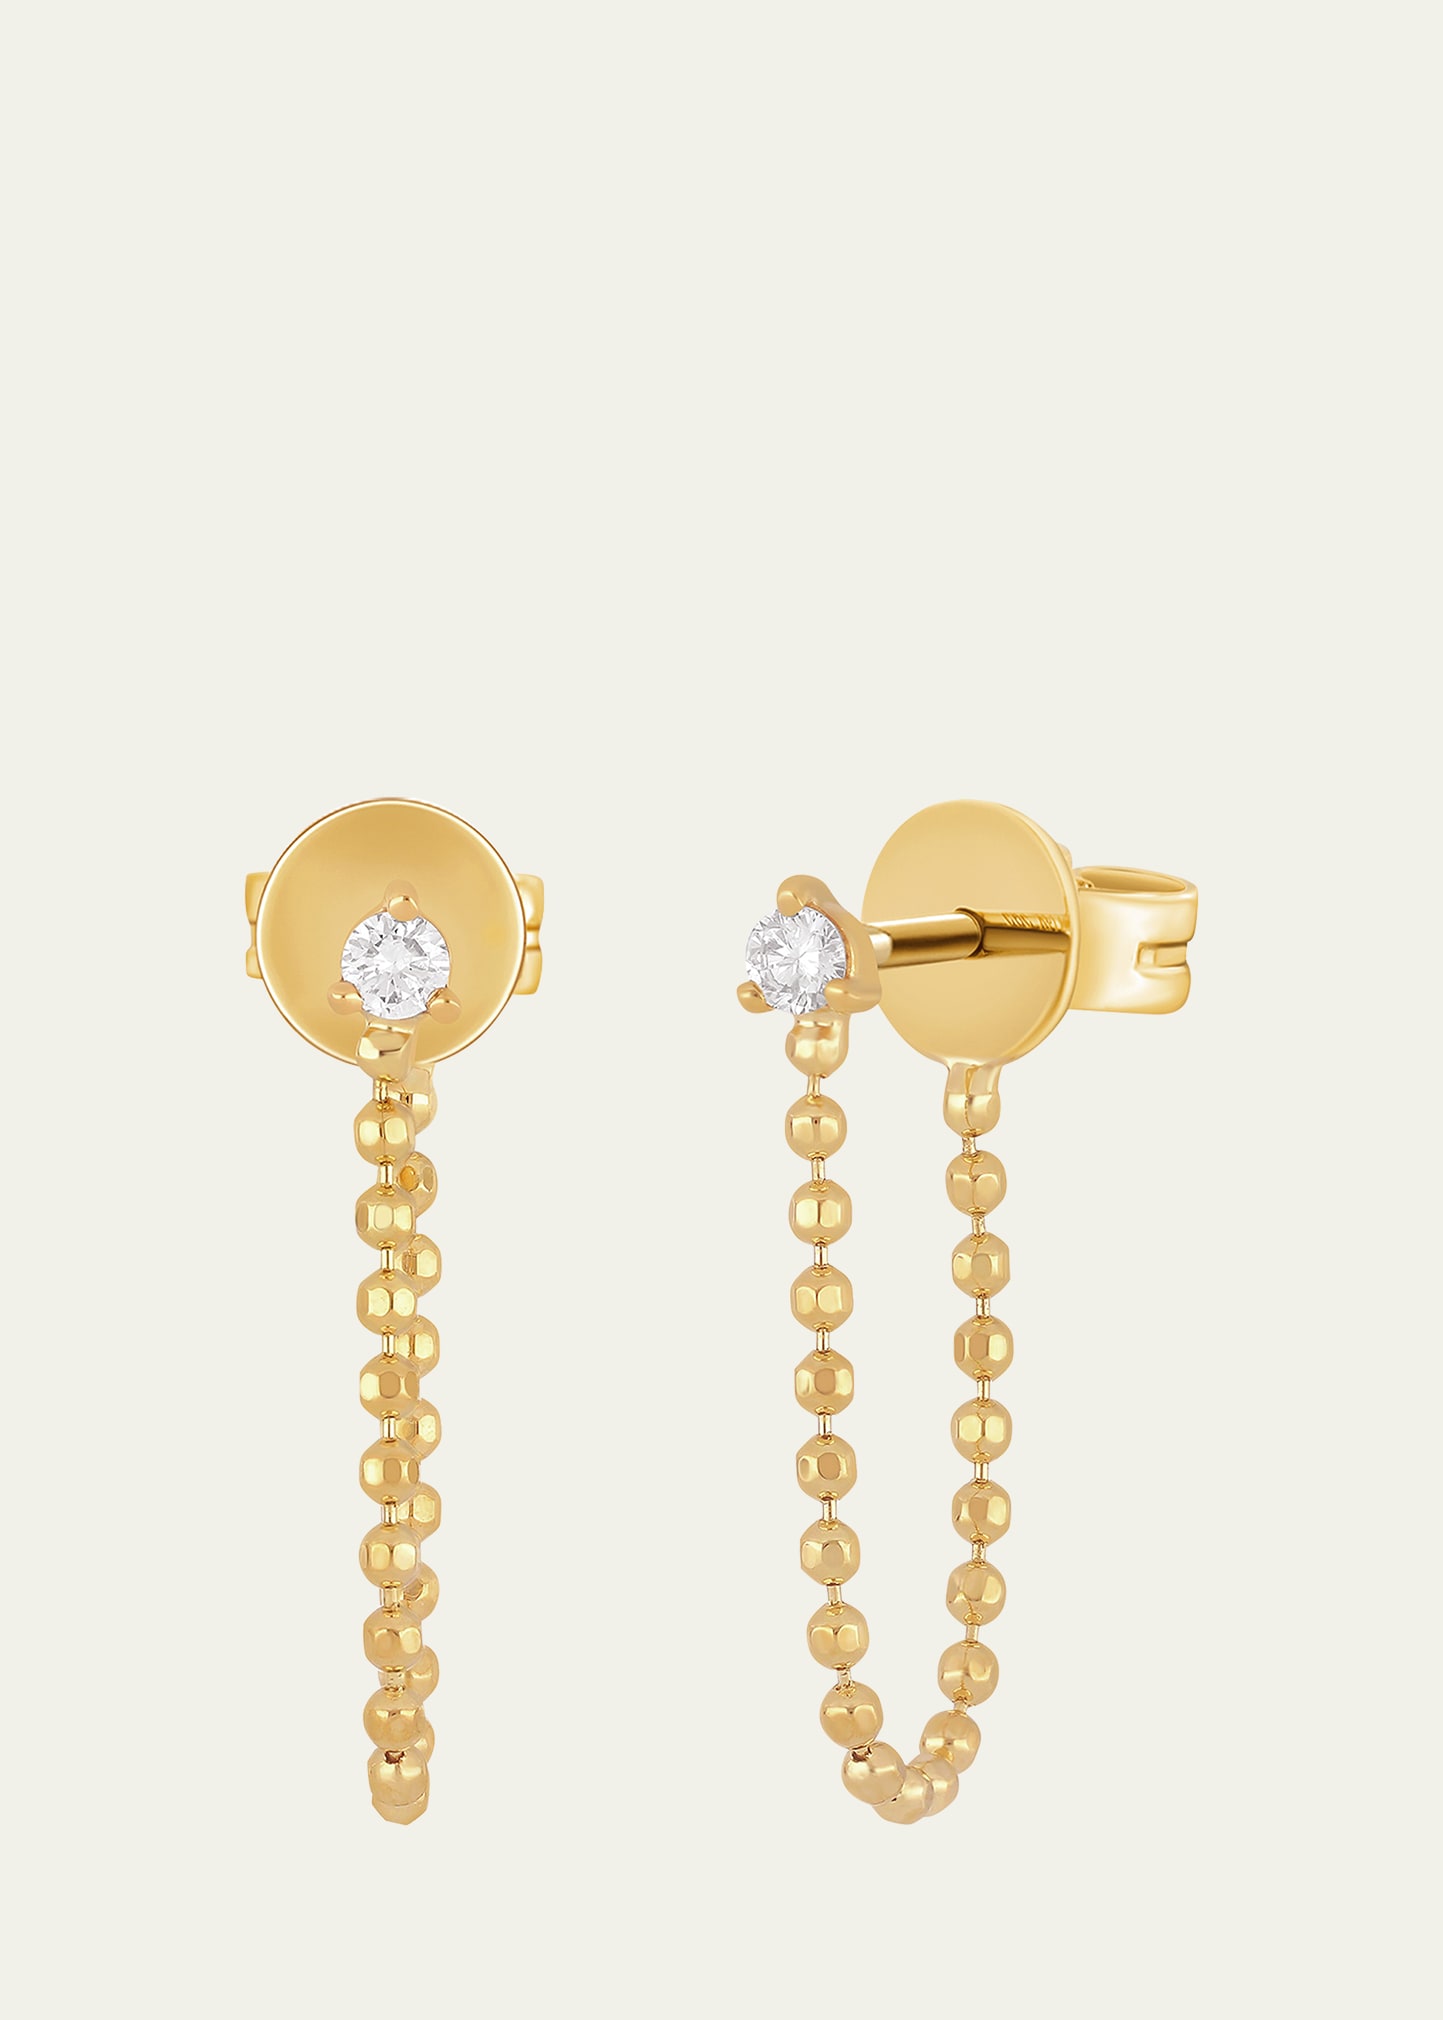 14K Yellow Gold Ball Chain Earrings with Diamonds